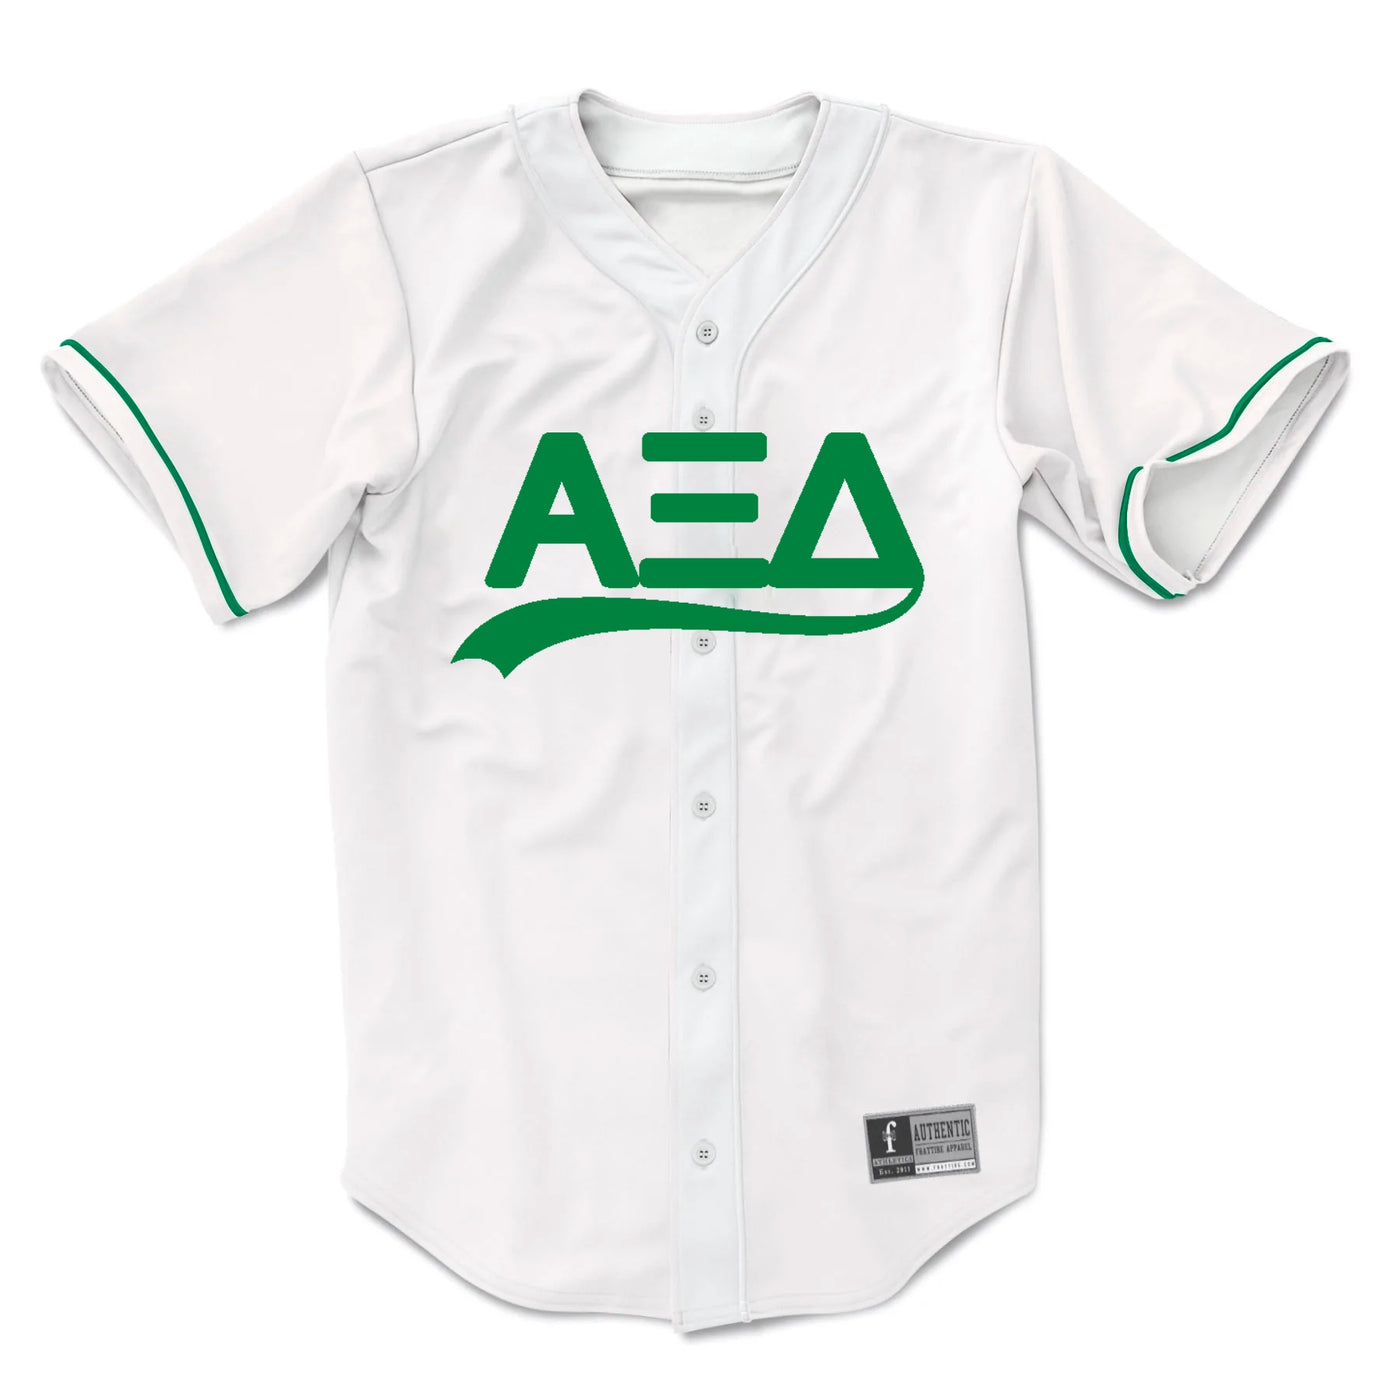 Alpha Xi Stetson Baseball Jersey